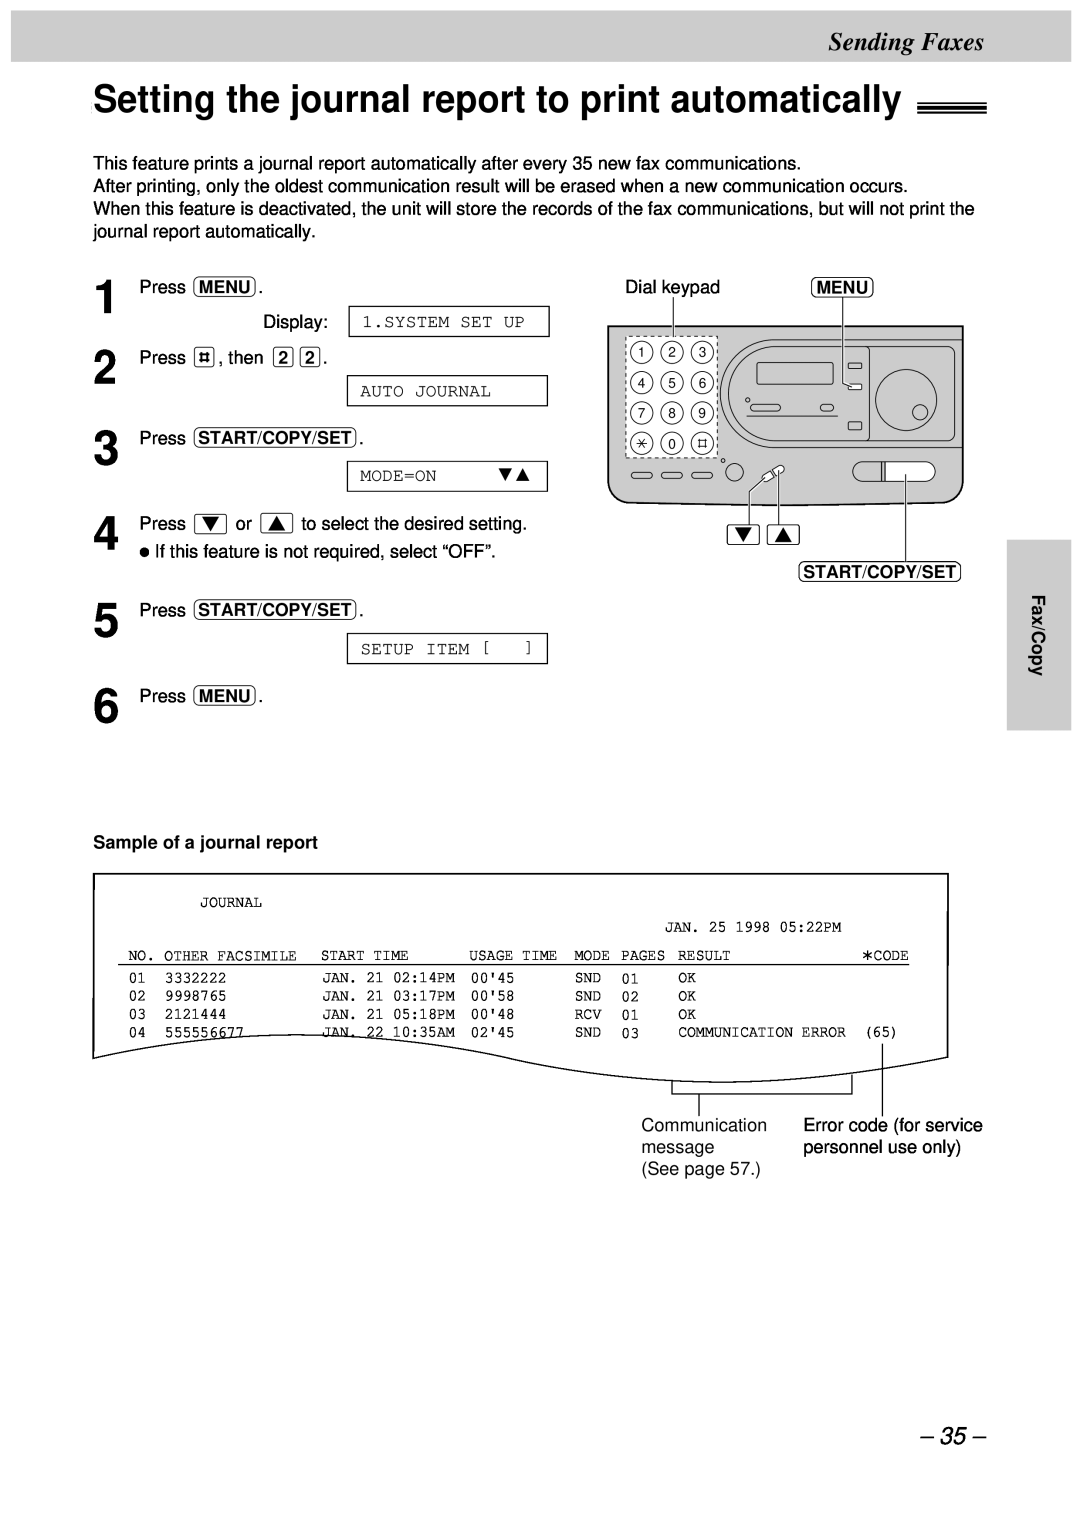 Panasonic KX-FT34HK, KX-FT33HK Setting the journal report to print automatically, Sending Faxes, Code, Communication Error 